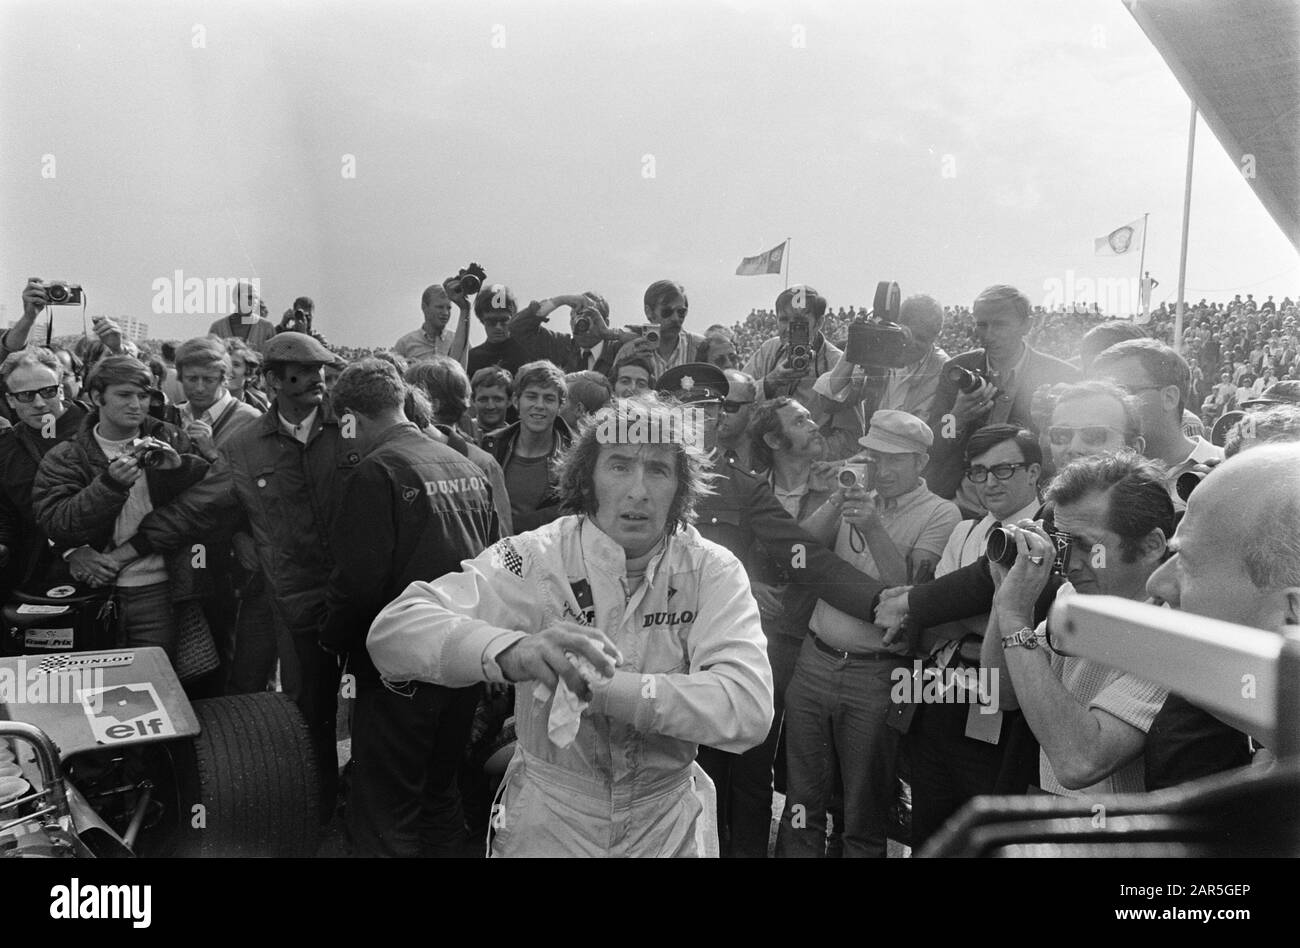 Grand Prix van Nederland 1969 Formula I in Zandvoort  Jackie Stewart immediately after the race Date: 21 June 1969 Location: Noord-Holland, Zandvoort Keywords: racing drivers, car races Personal name: Stewart, Jackie Stock Photo